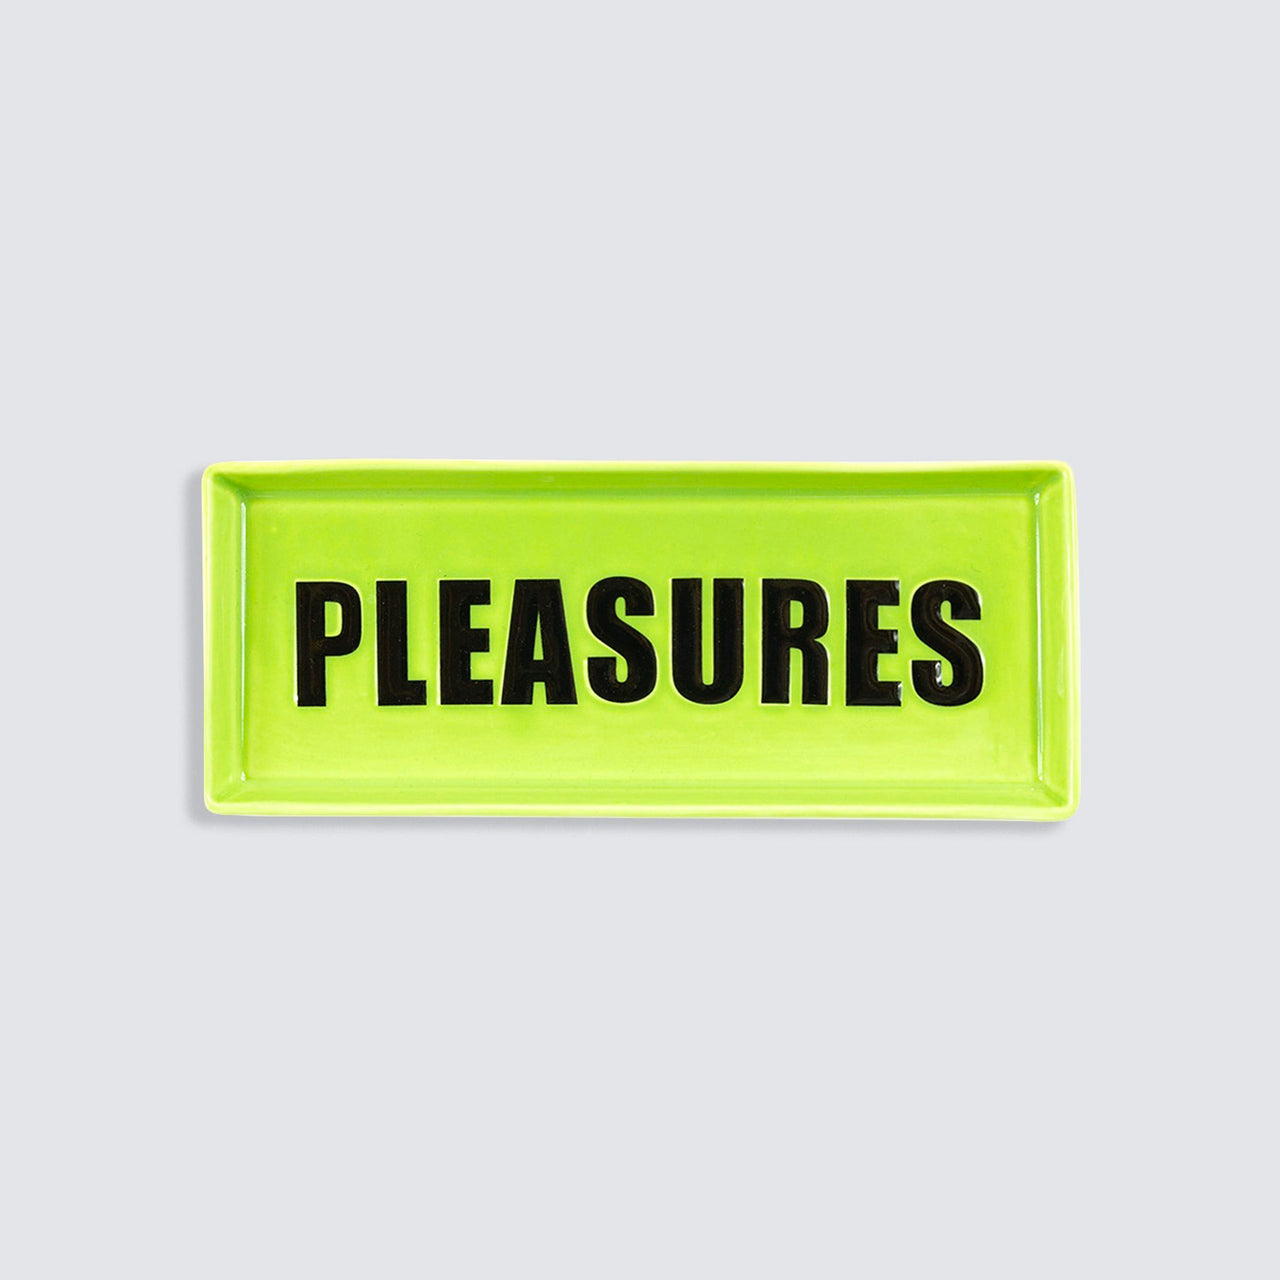 Pleasures Ceramic Tray - Green